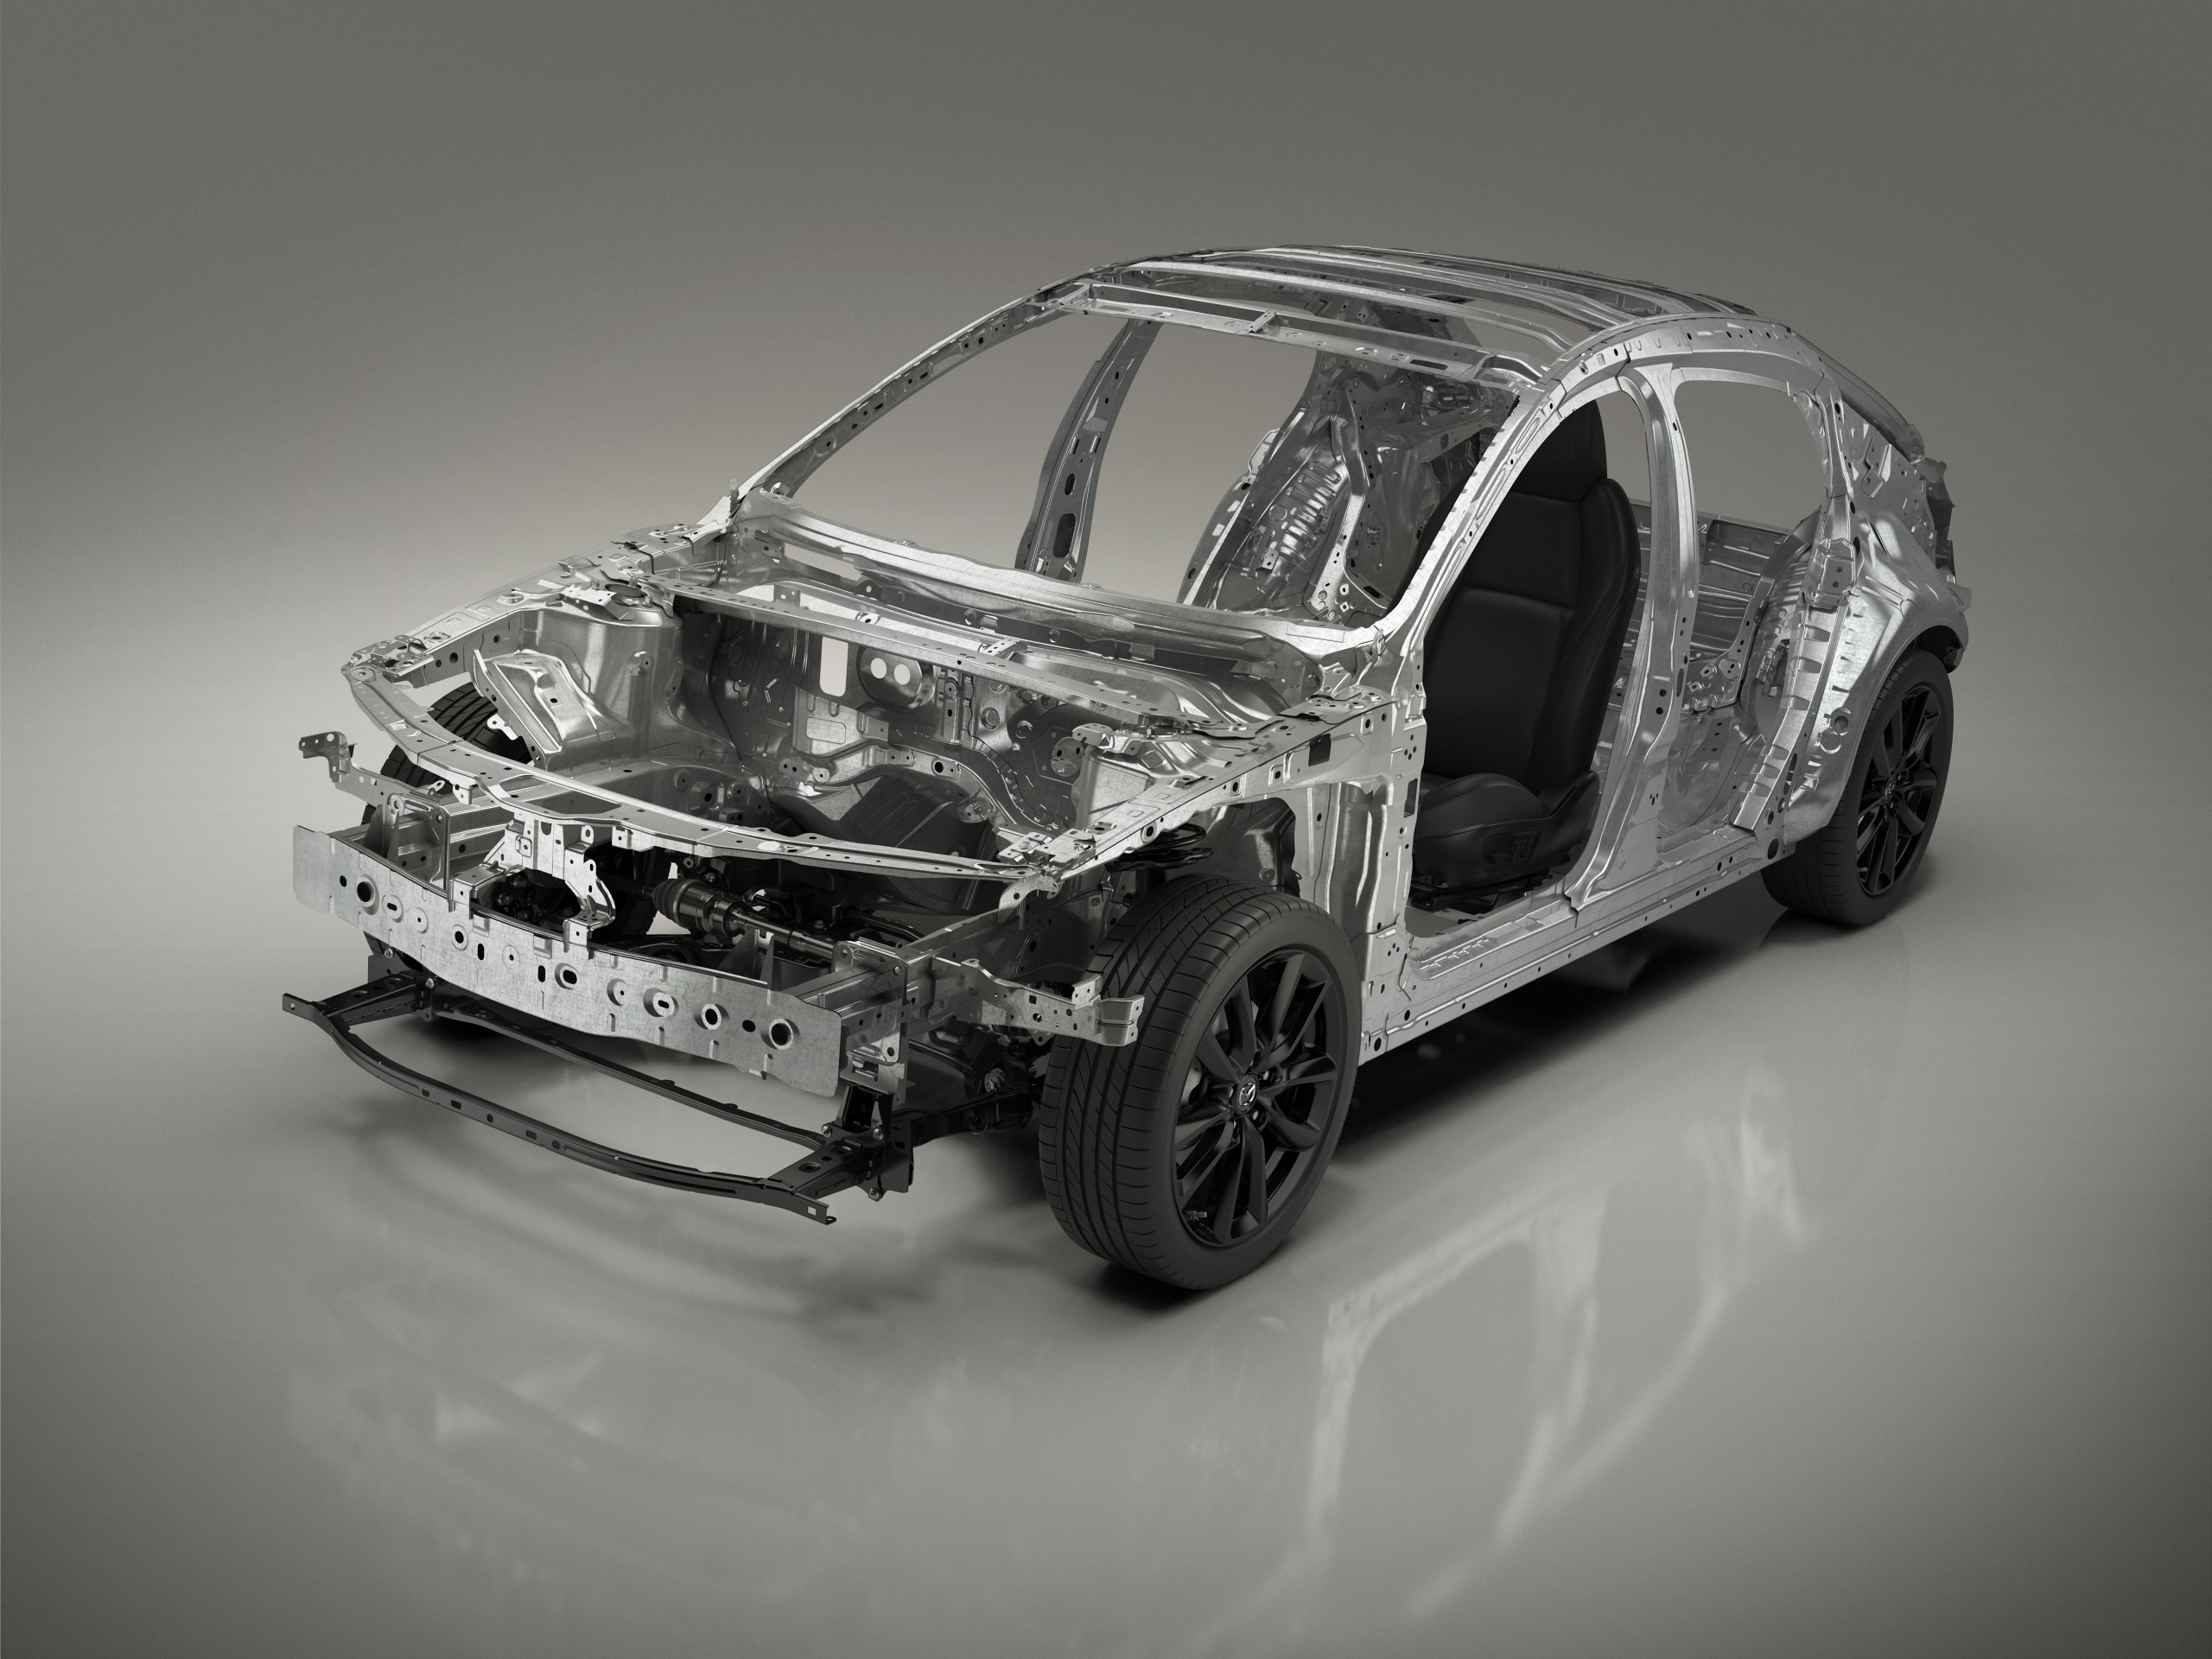 38_All-New-Mazda3_Technical_SKYACTIV-Vehicle-Architecture